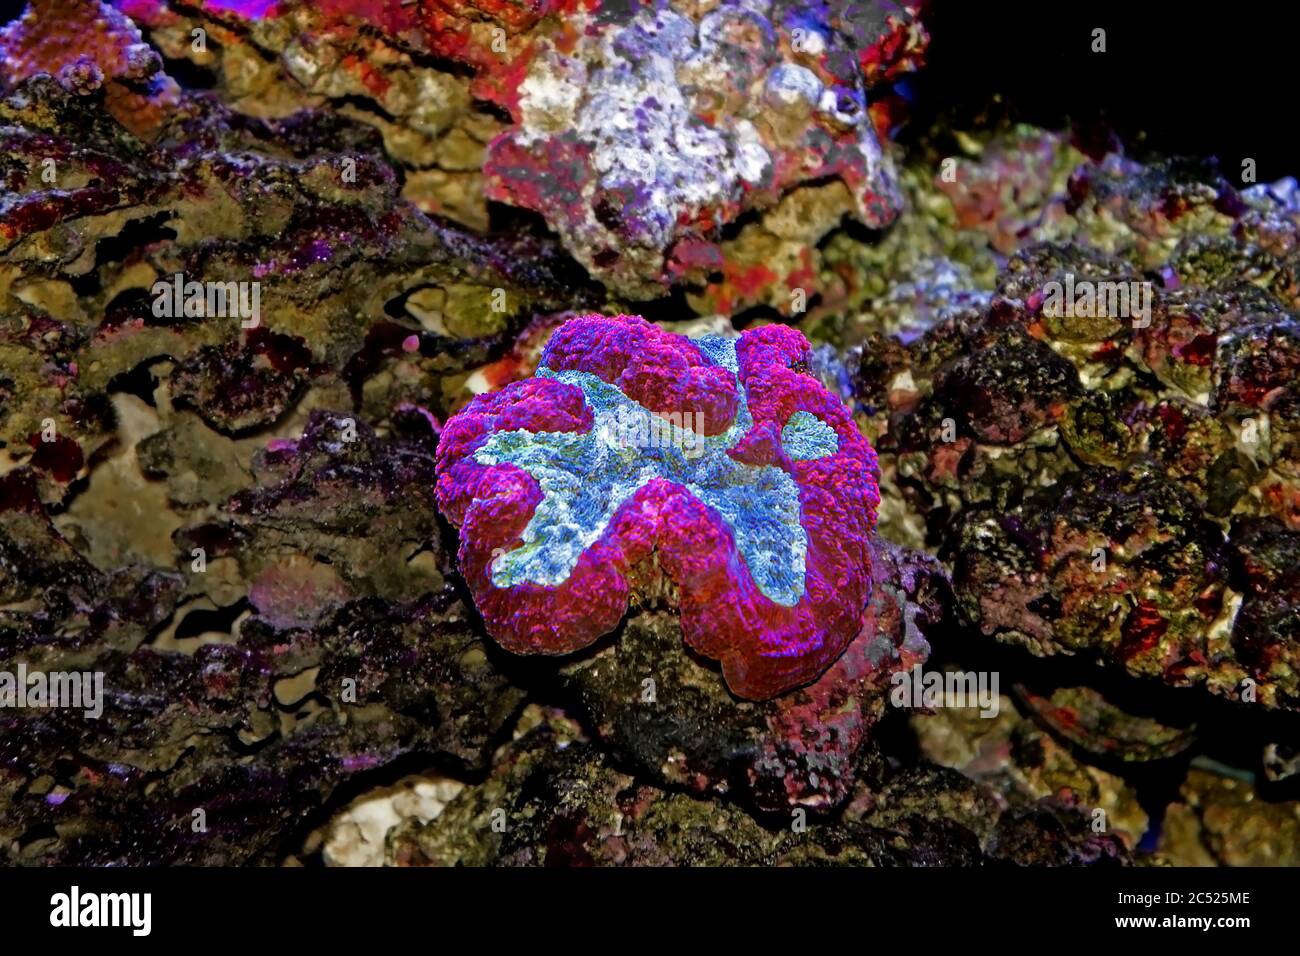 Symphyllia Brain LPS Coral (Symphyllia agaricia) Stock Photo